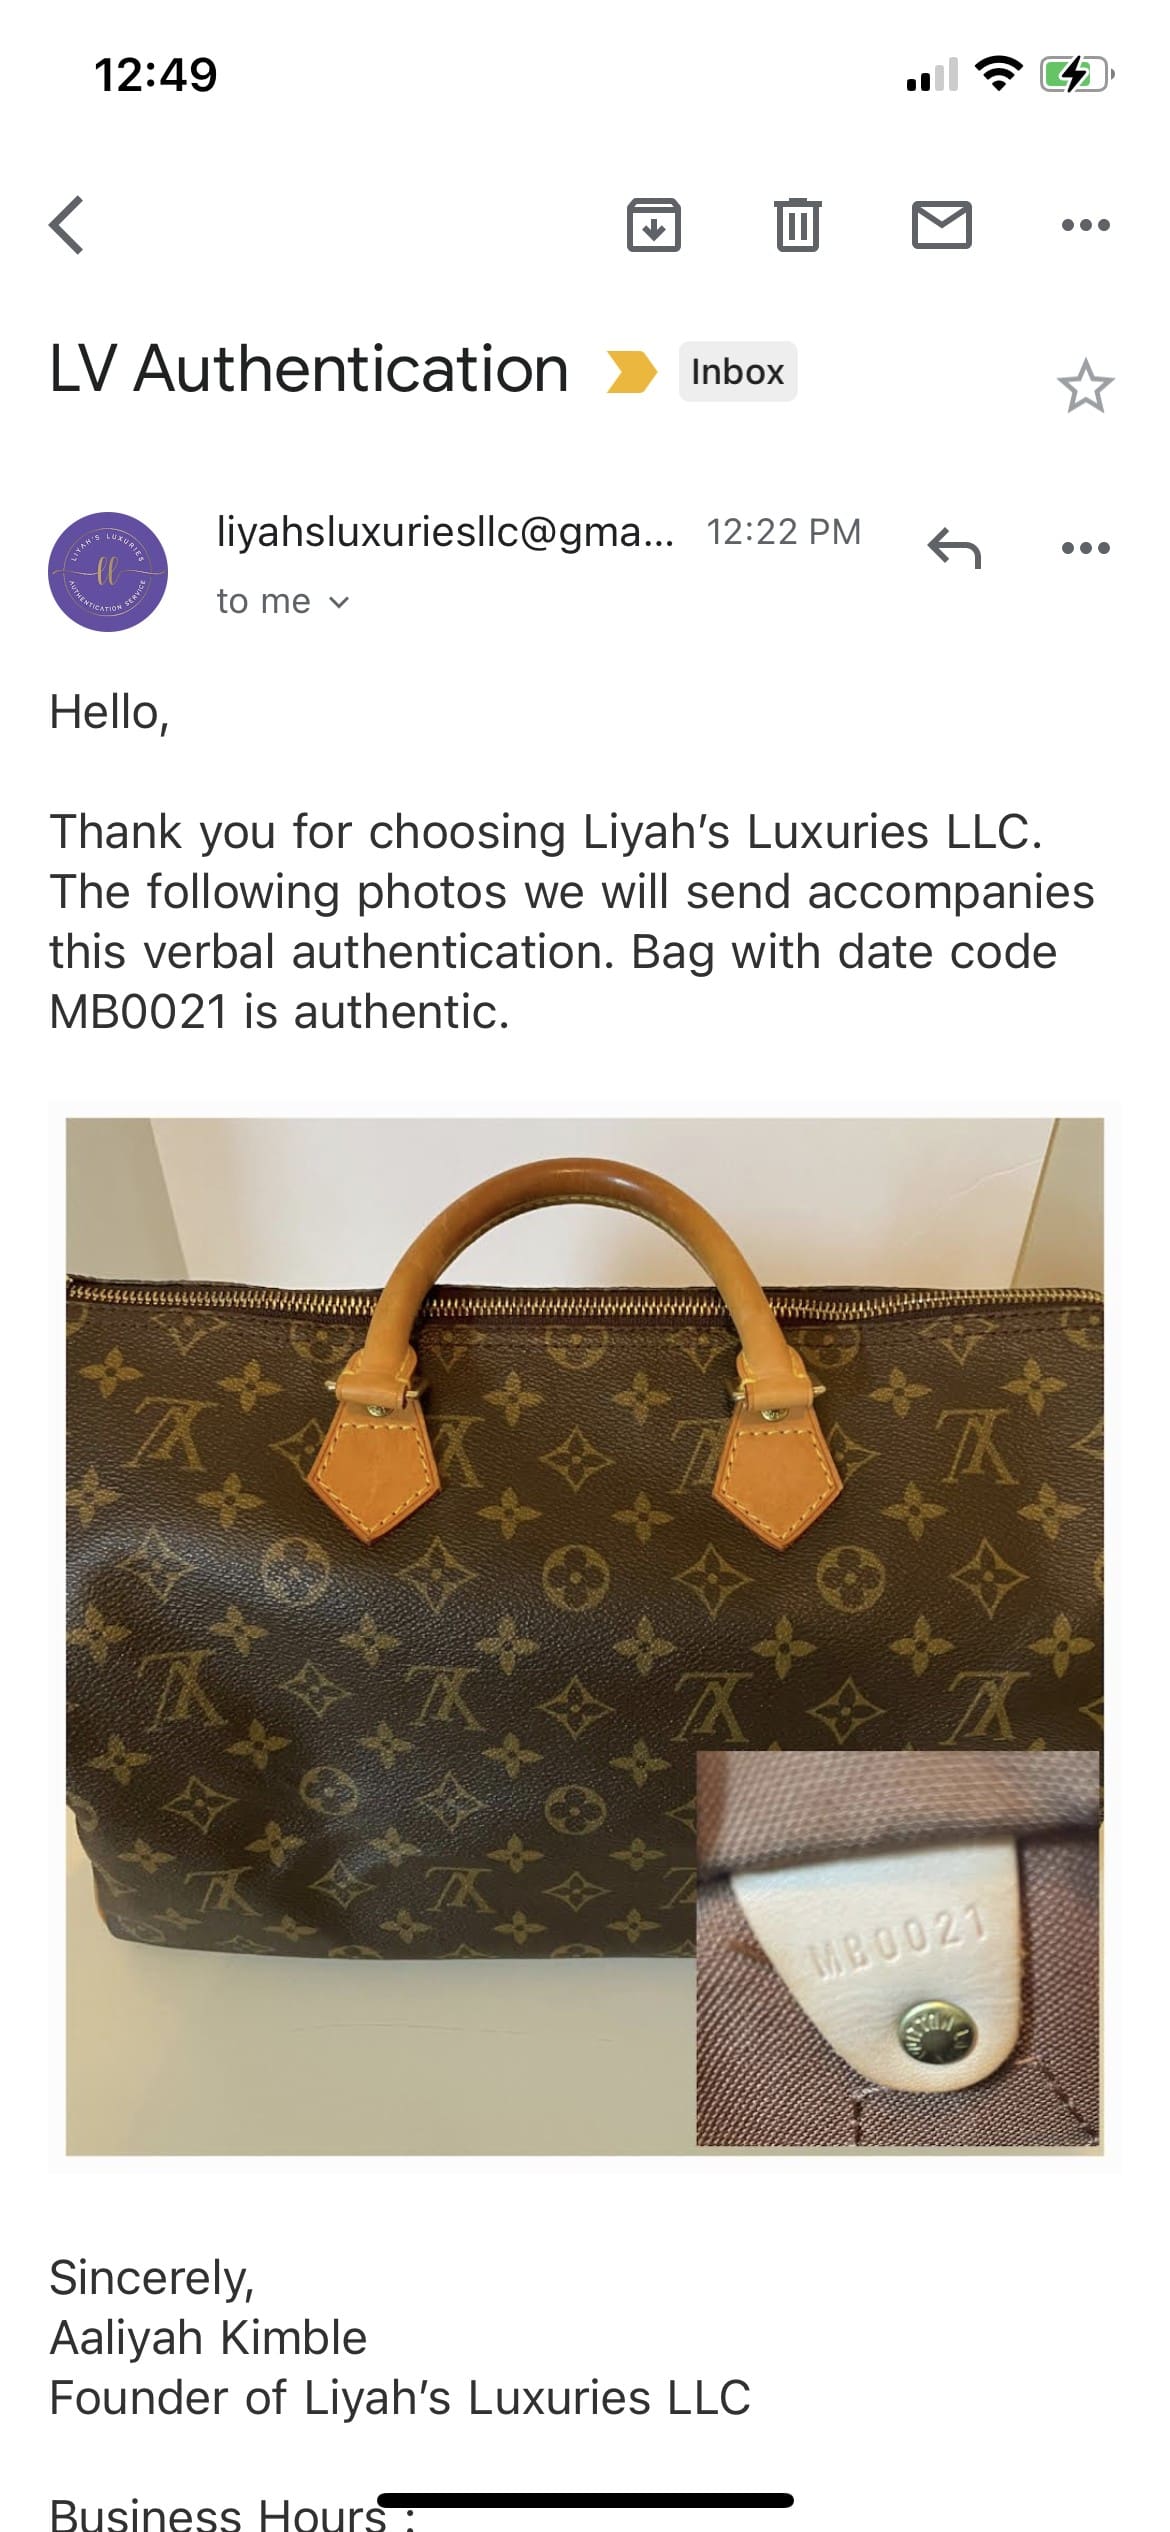 Liyah's Luxuries LLC